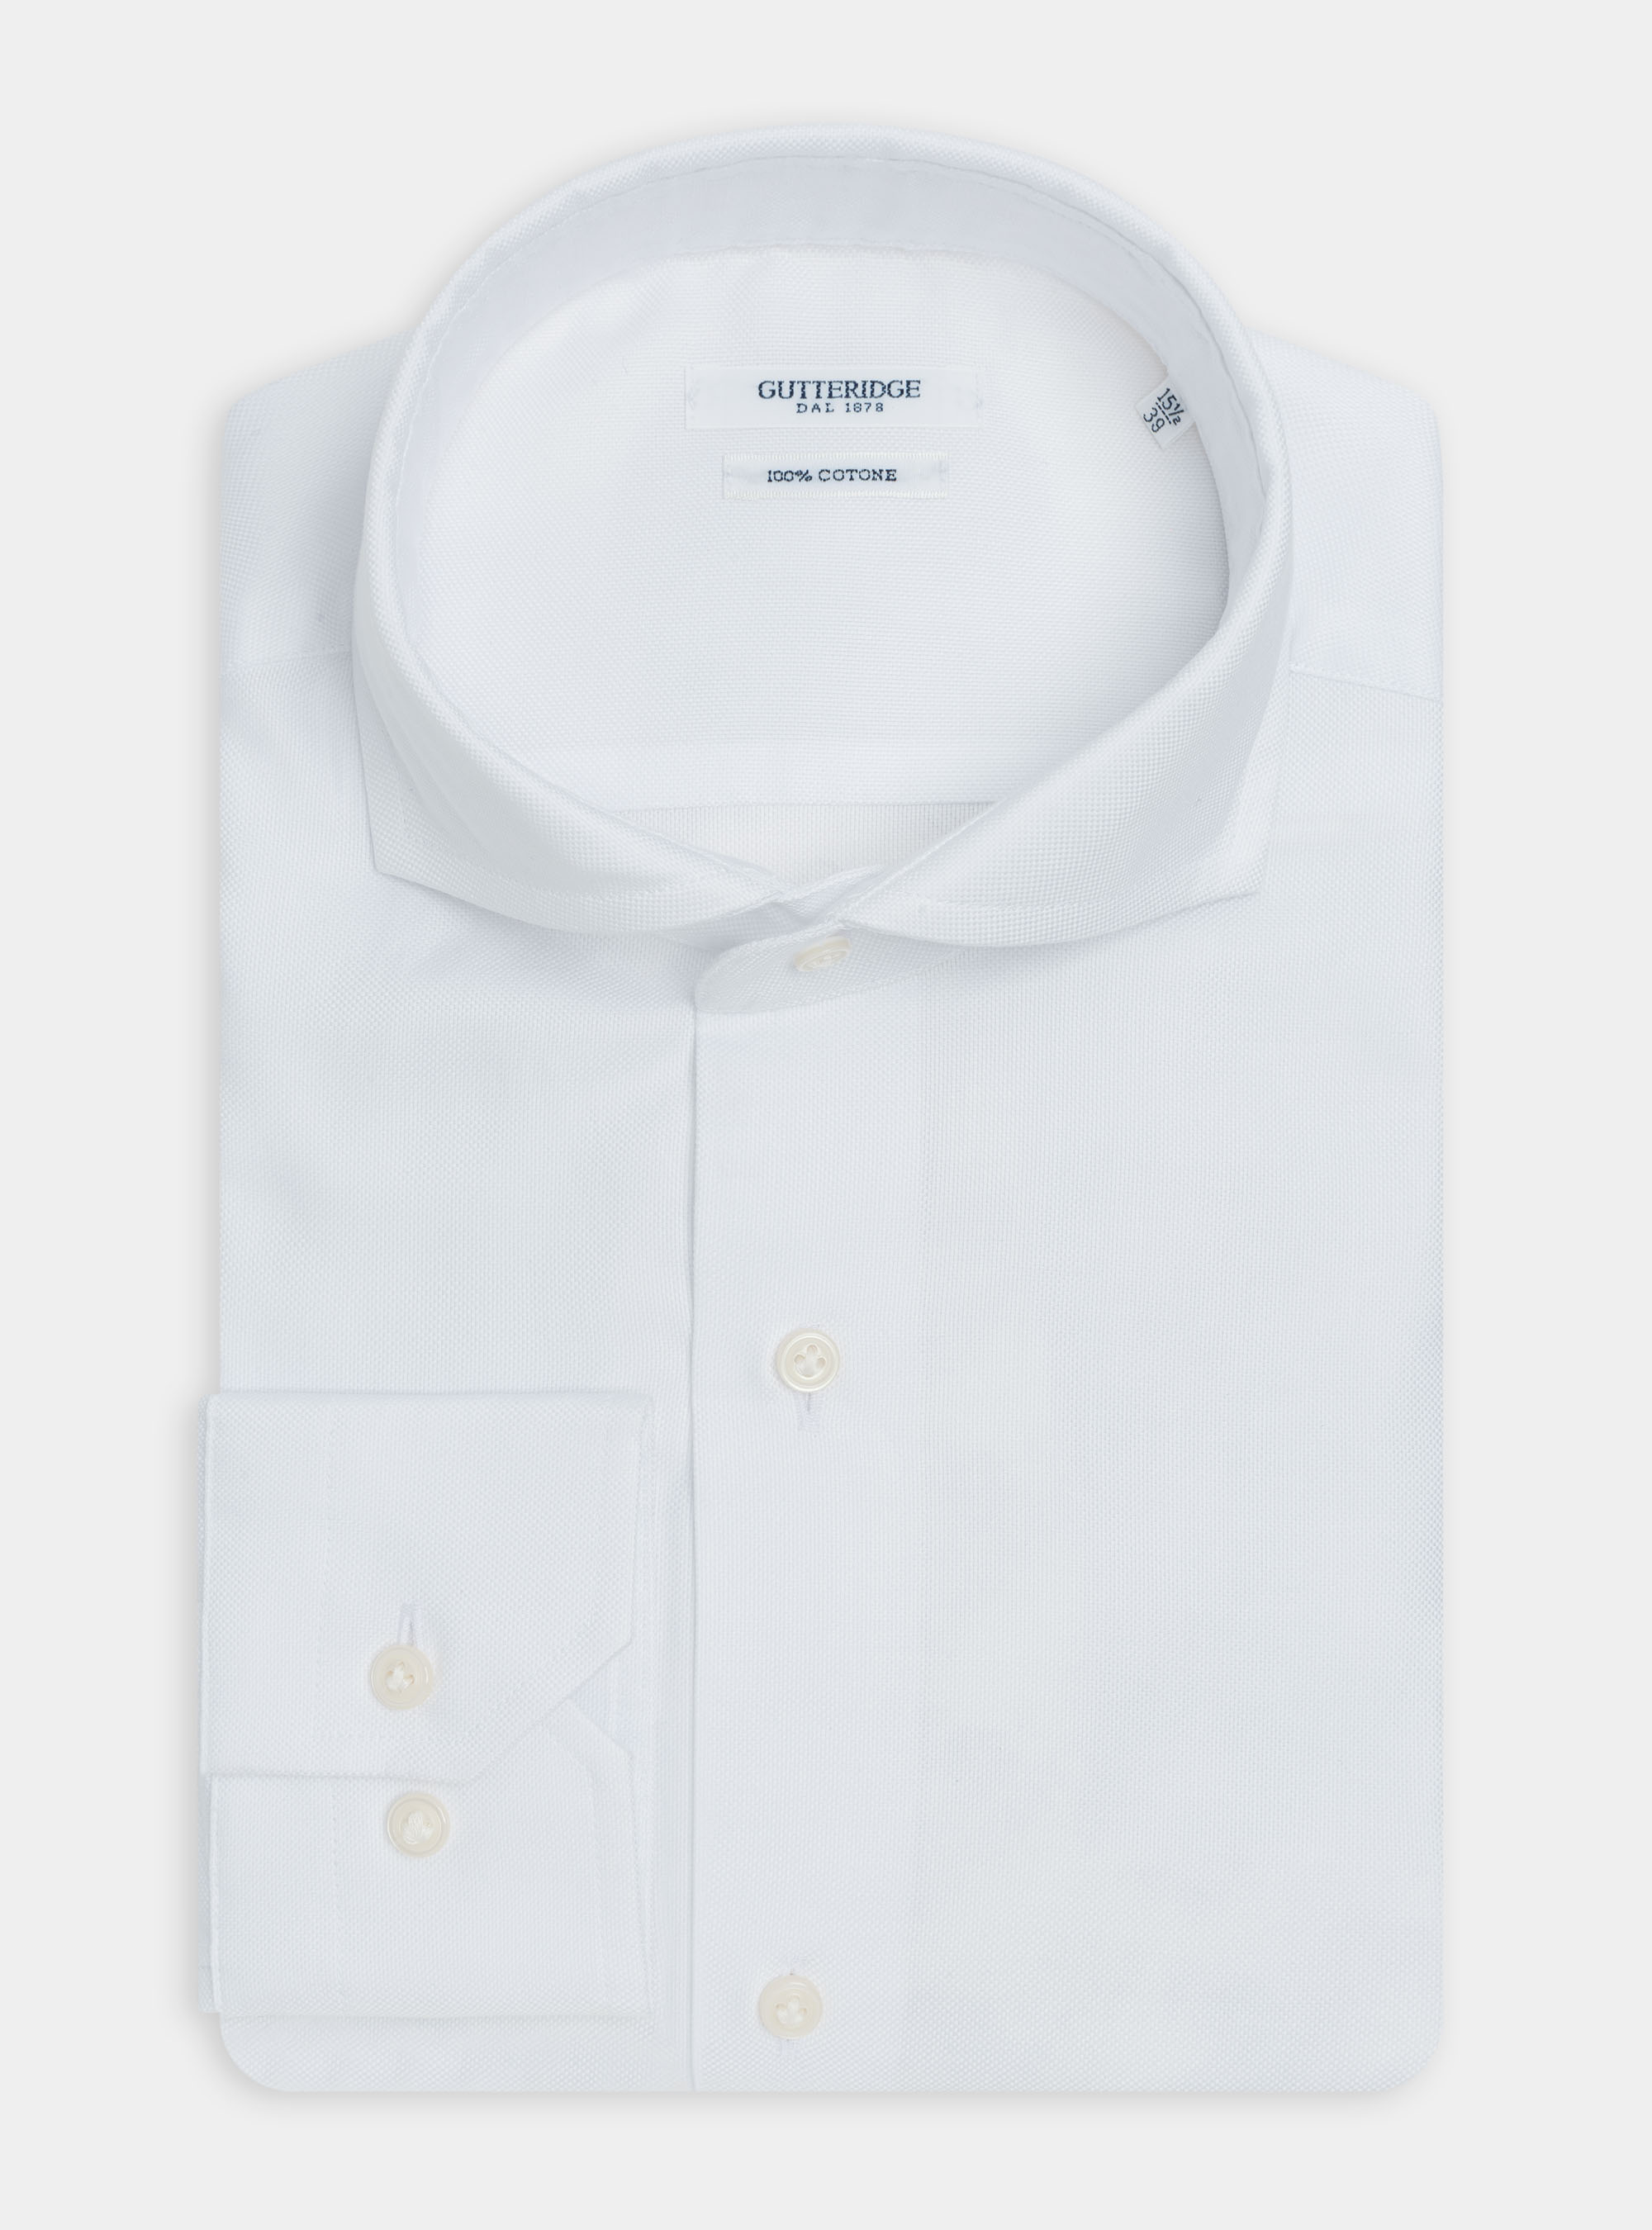 Oxford cotton French collar shirt | GutteridgeUS | catalog-gutteridge ...